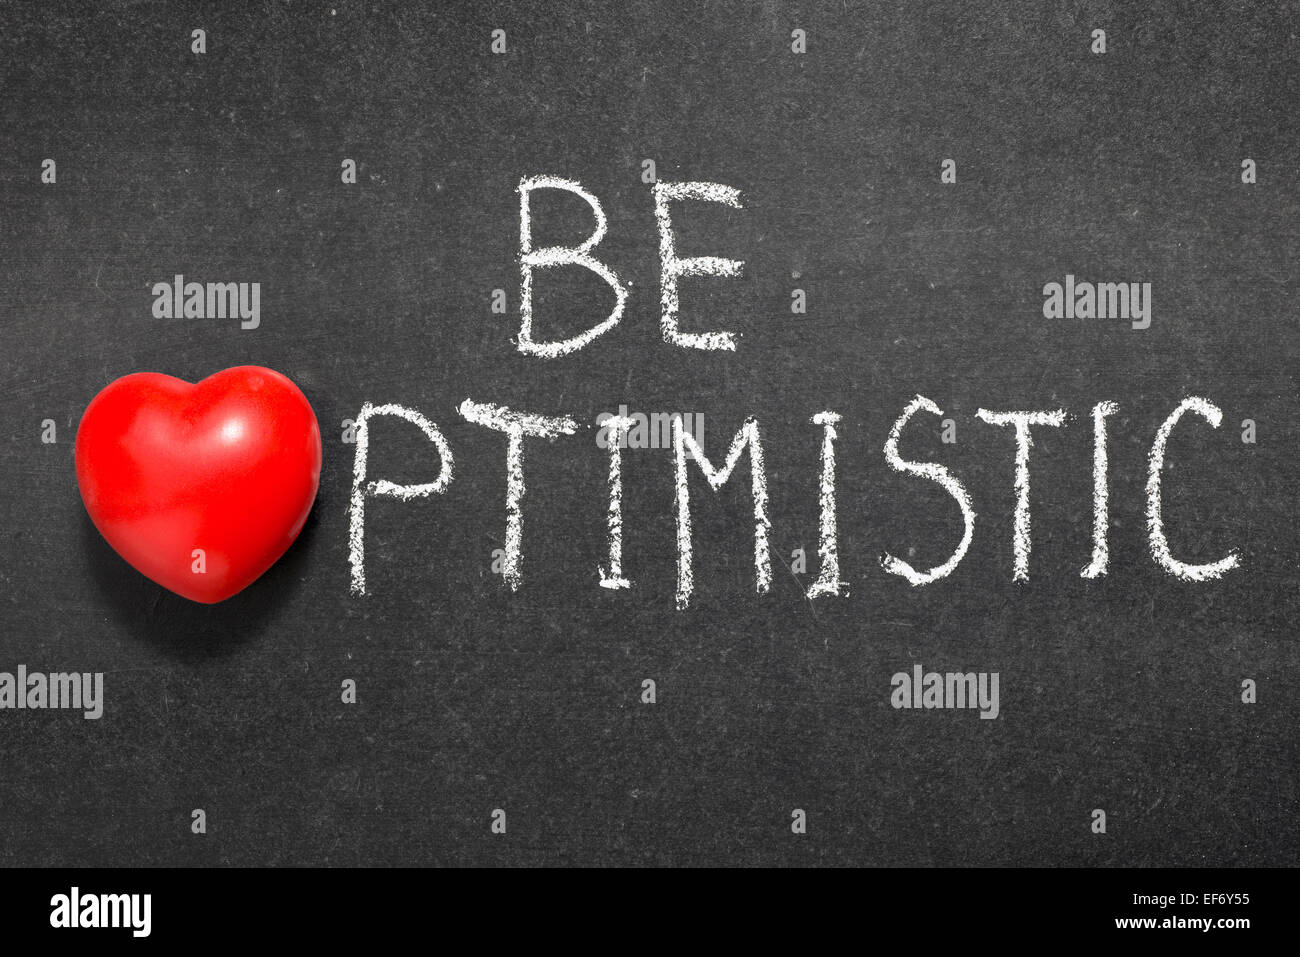 be optimistic phrase handwritten on blackboard with heart symbol instead of O Stock Photo